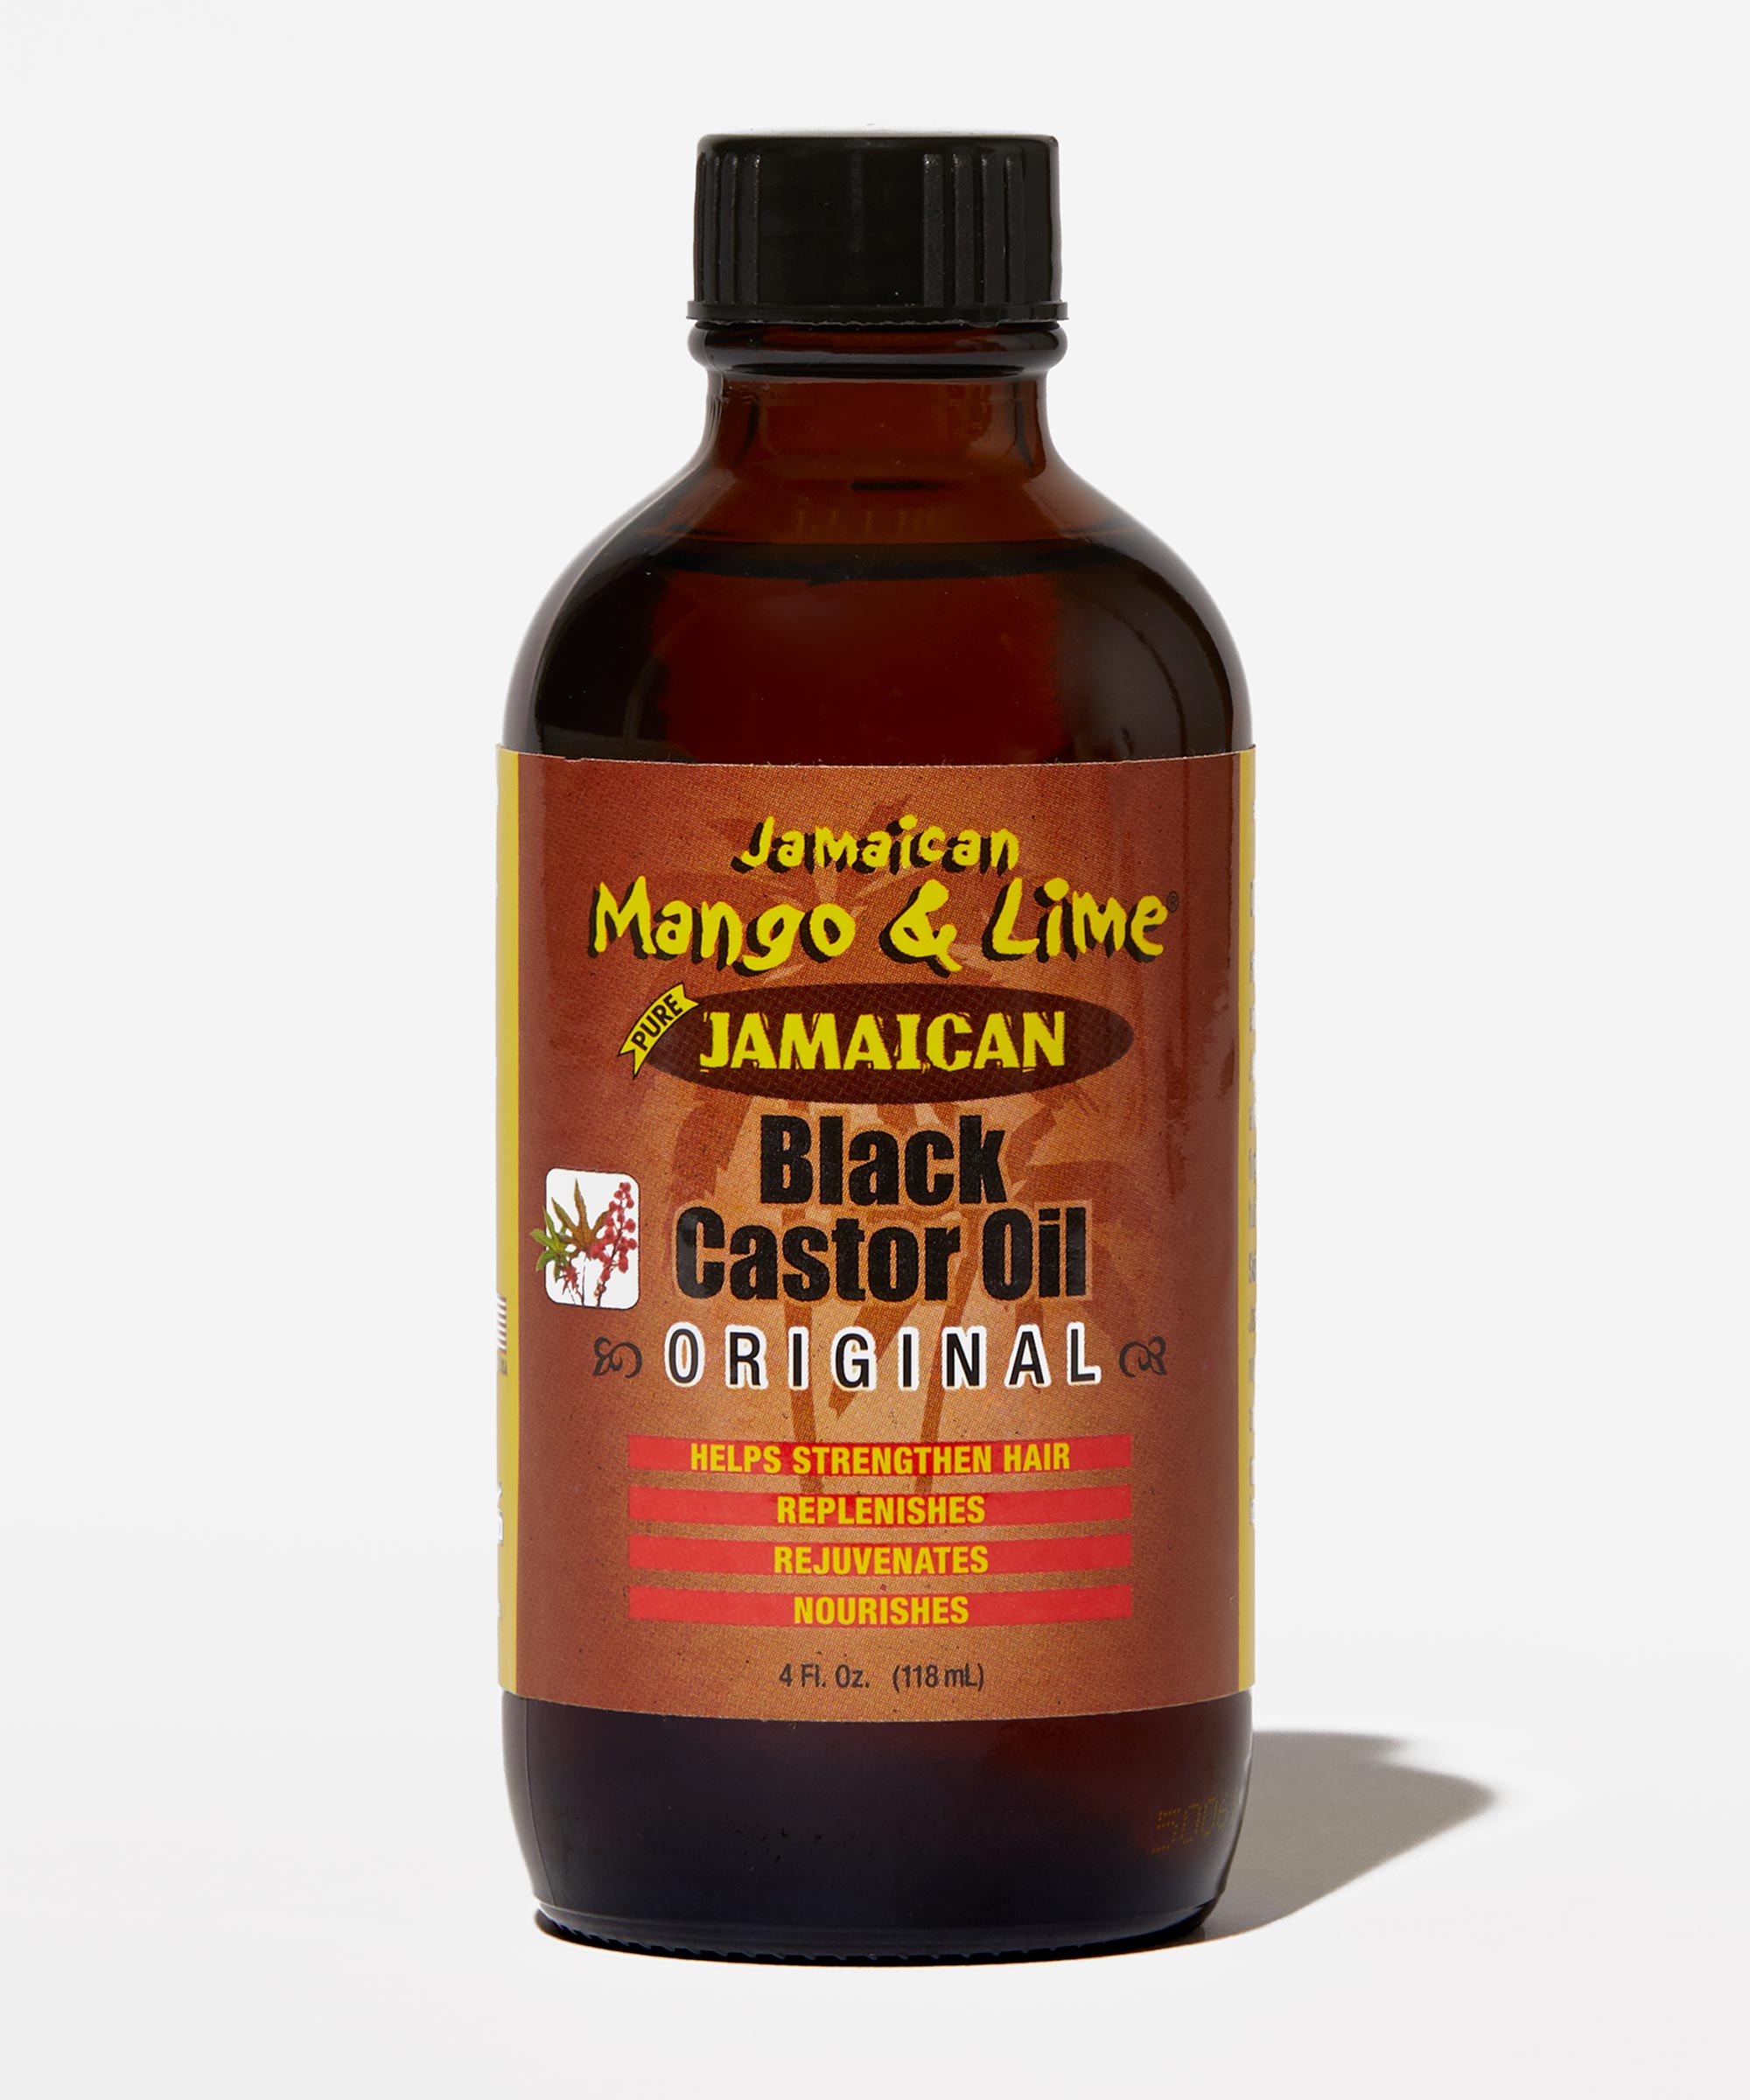 Jamaican Mango & Lime Jamaican Black Castor Oil Original at BEAUTY BAY